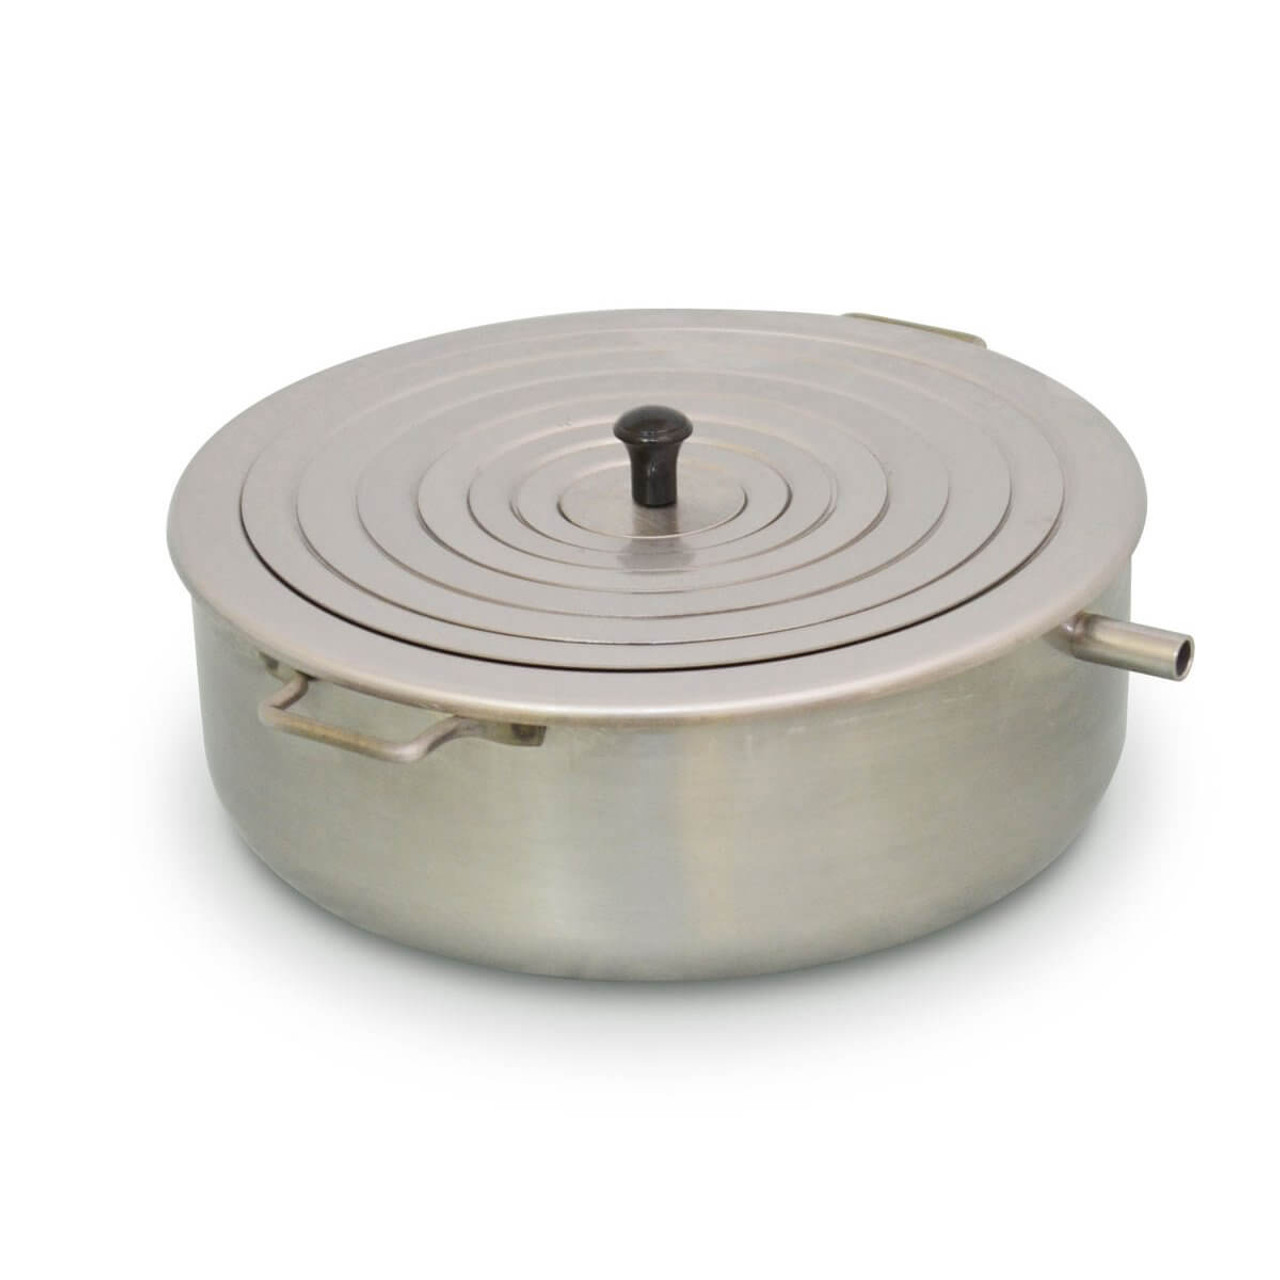 Fireproof gas water heater stainless steel 60-150mm aluminum